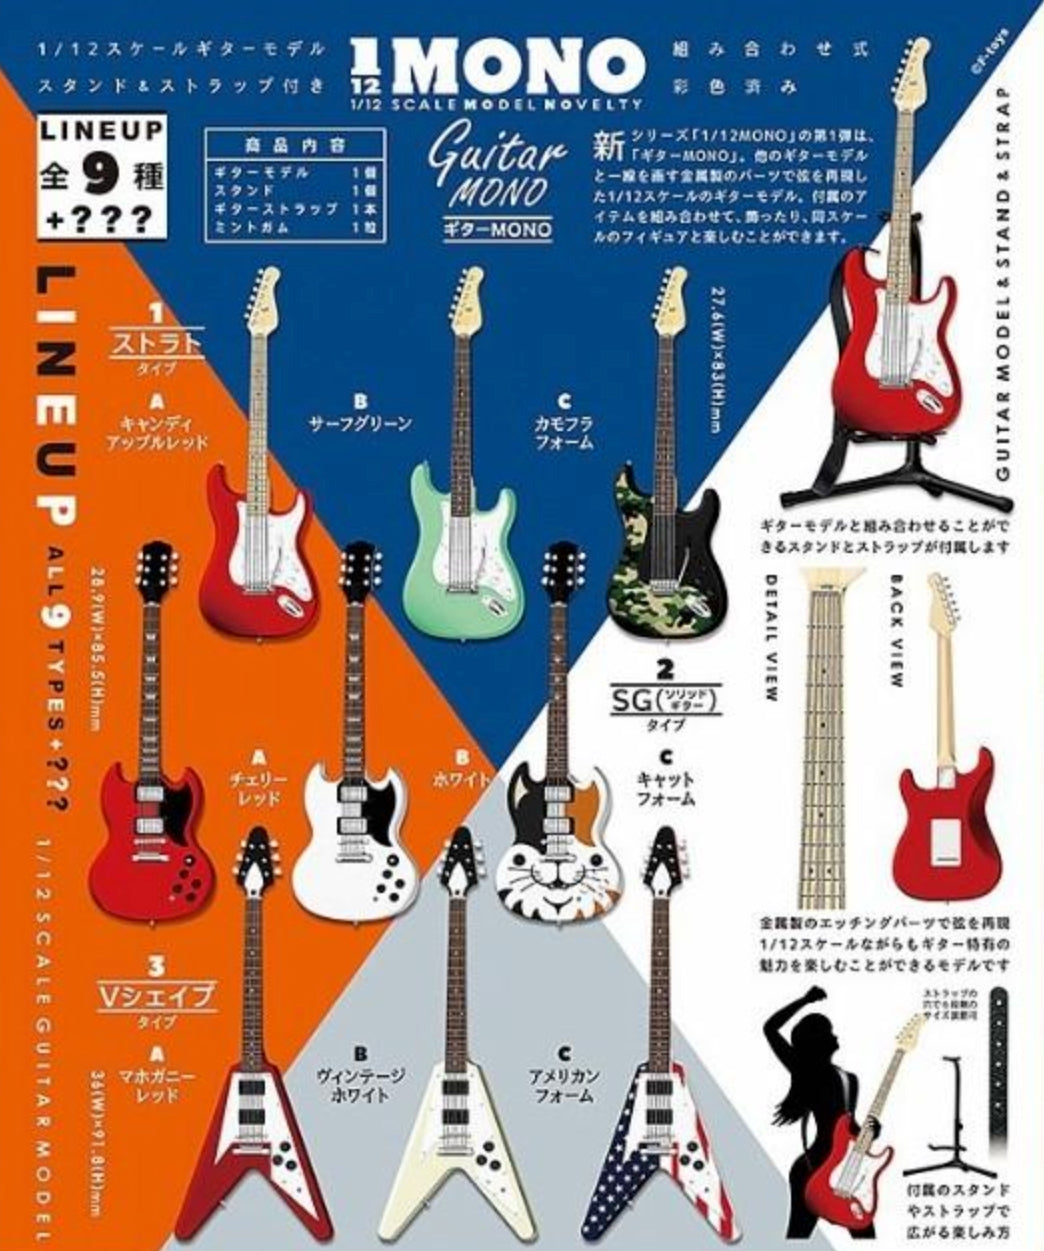 F-toys 1/12 Mono Model Novelty Guitar ver 9+1 Secret Trading Figure Set